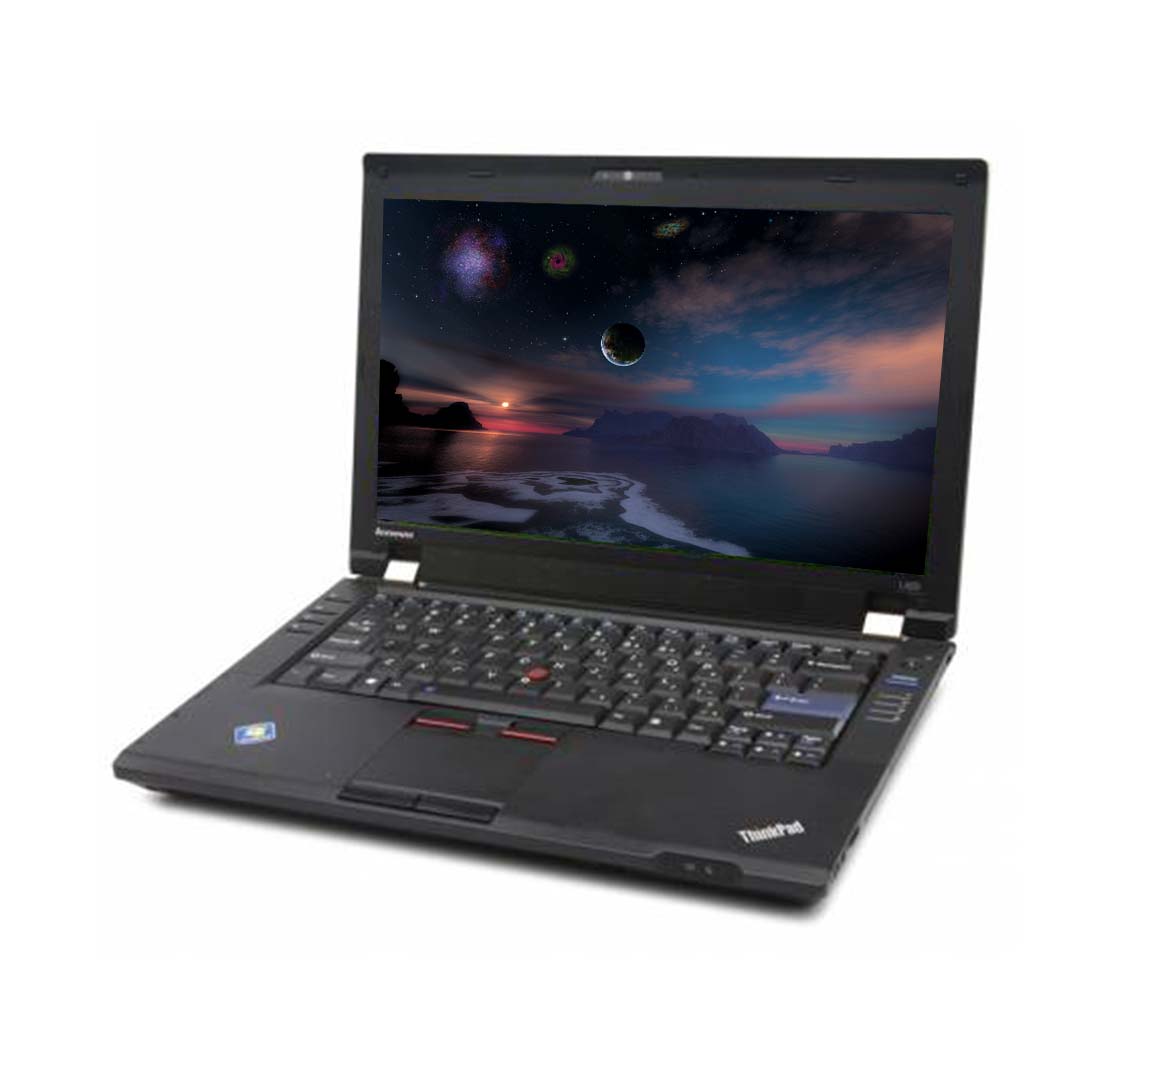 Lenovo ThinkPad L420 Business Laptop, Intel Core i3-2nd Gen CPU, 4GB RAM, 320GB HDD, 14 inch Display, Windows 10 Pro, Refurbished Laptop